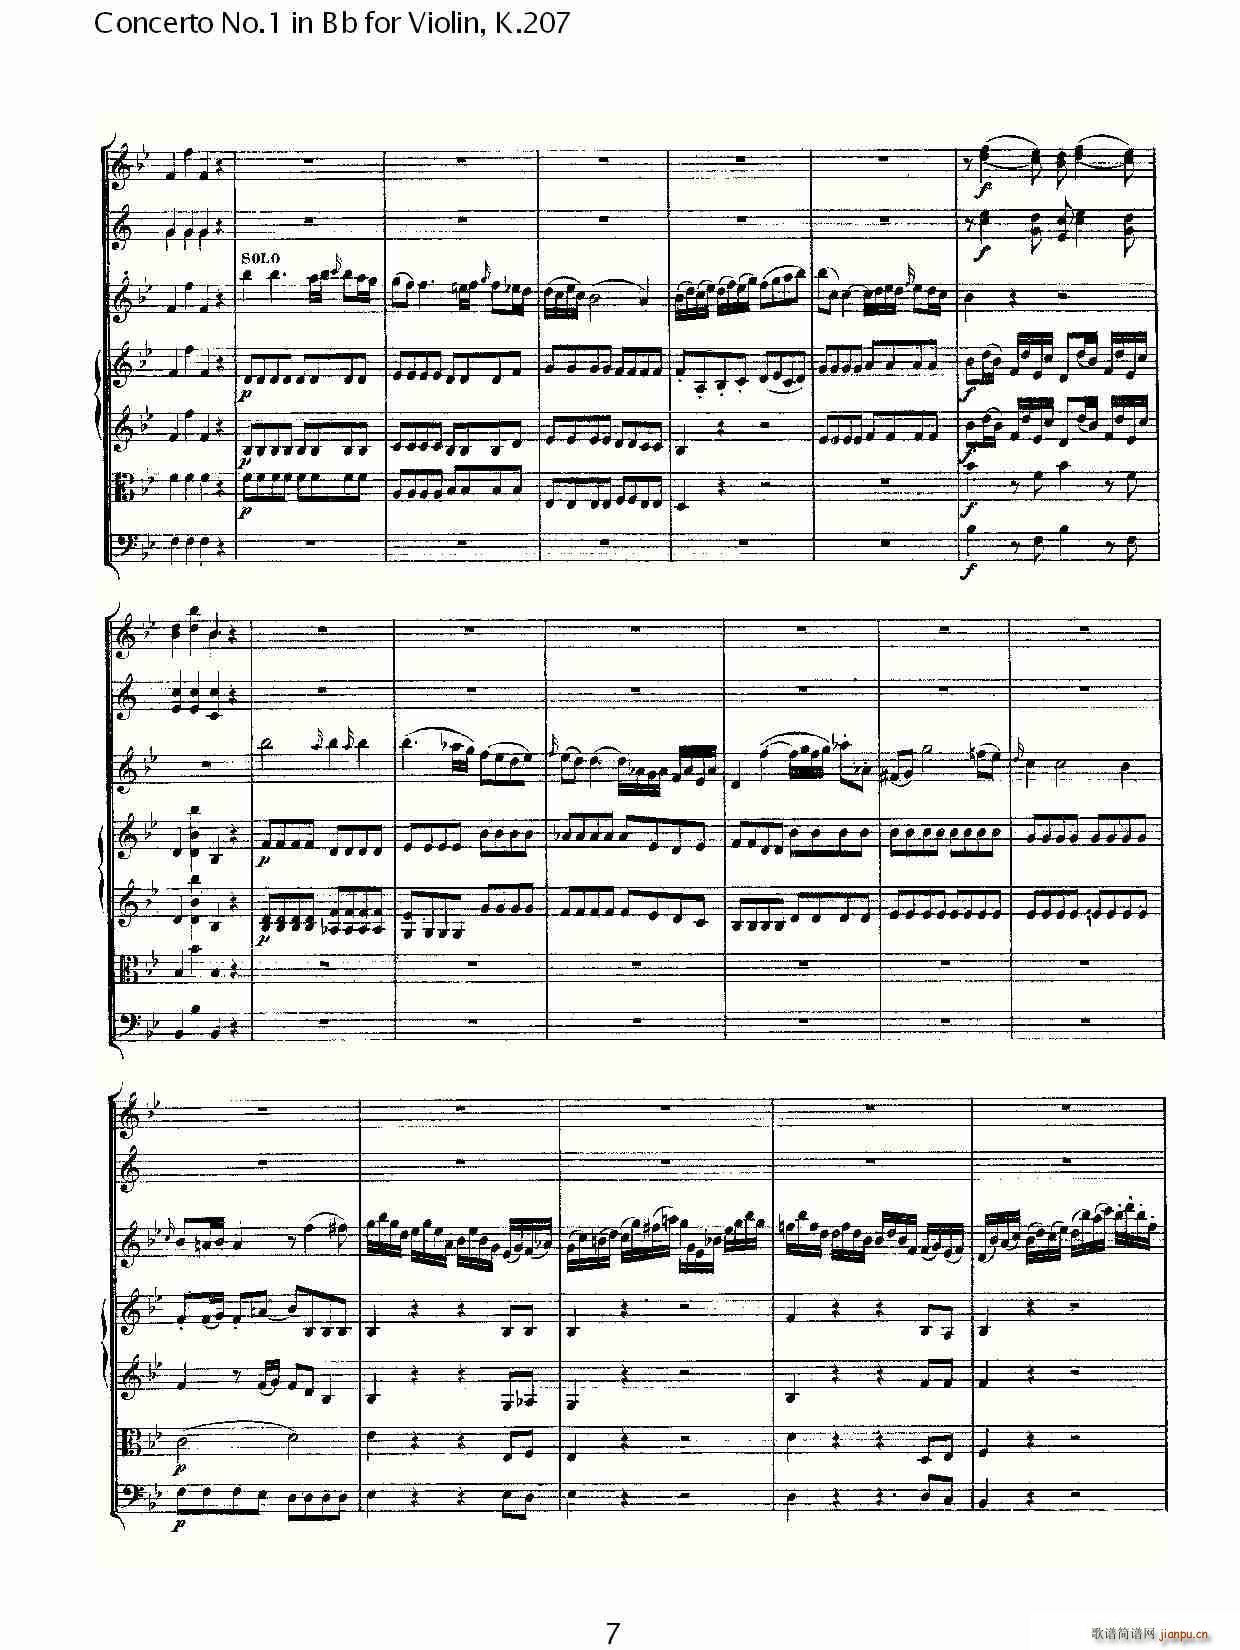 Concerto No.1 in Bb for Violin, K.207(С)7